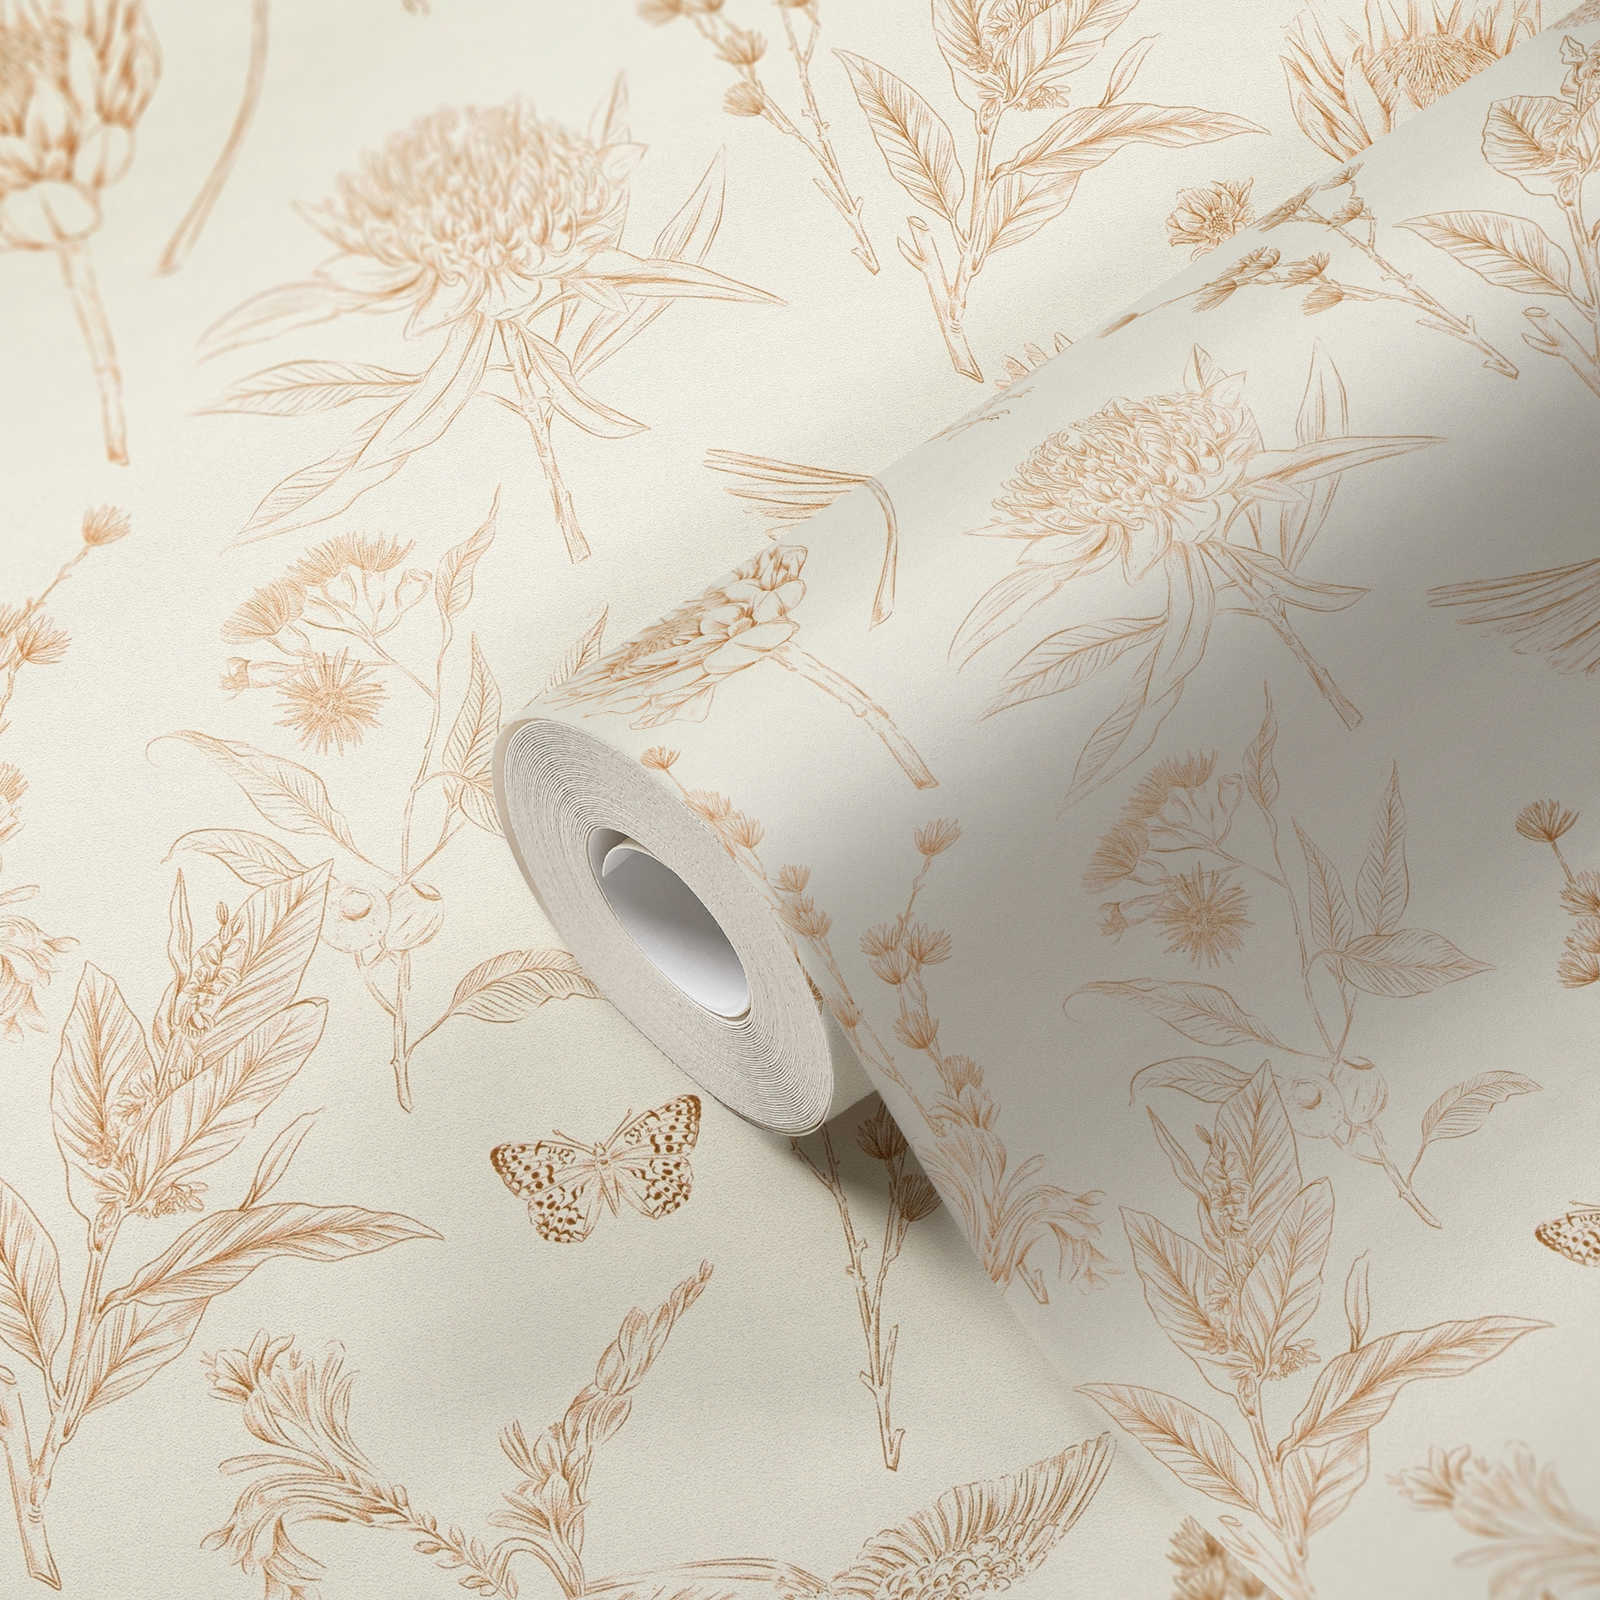             Floral wallpaper with leaves & animals textured matt - white, brown, beige
        